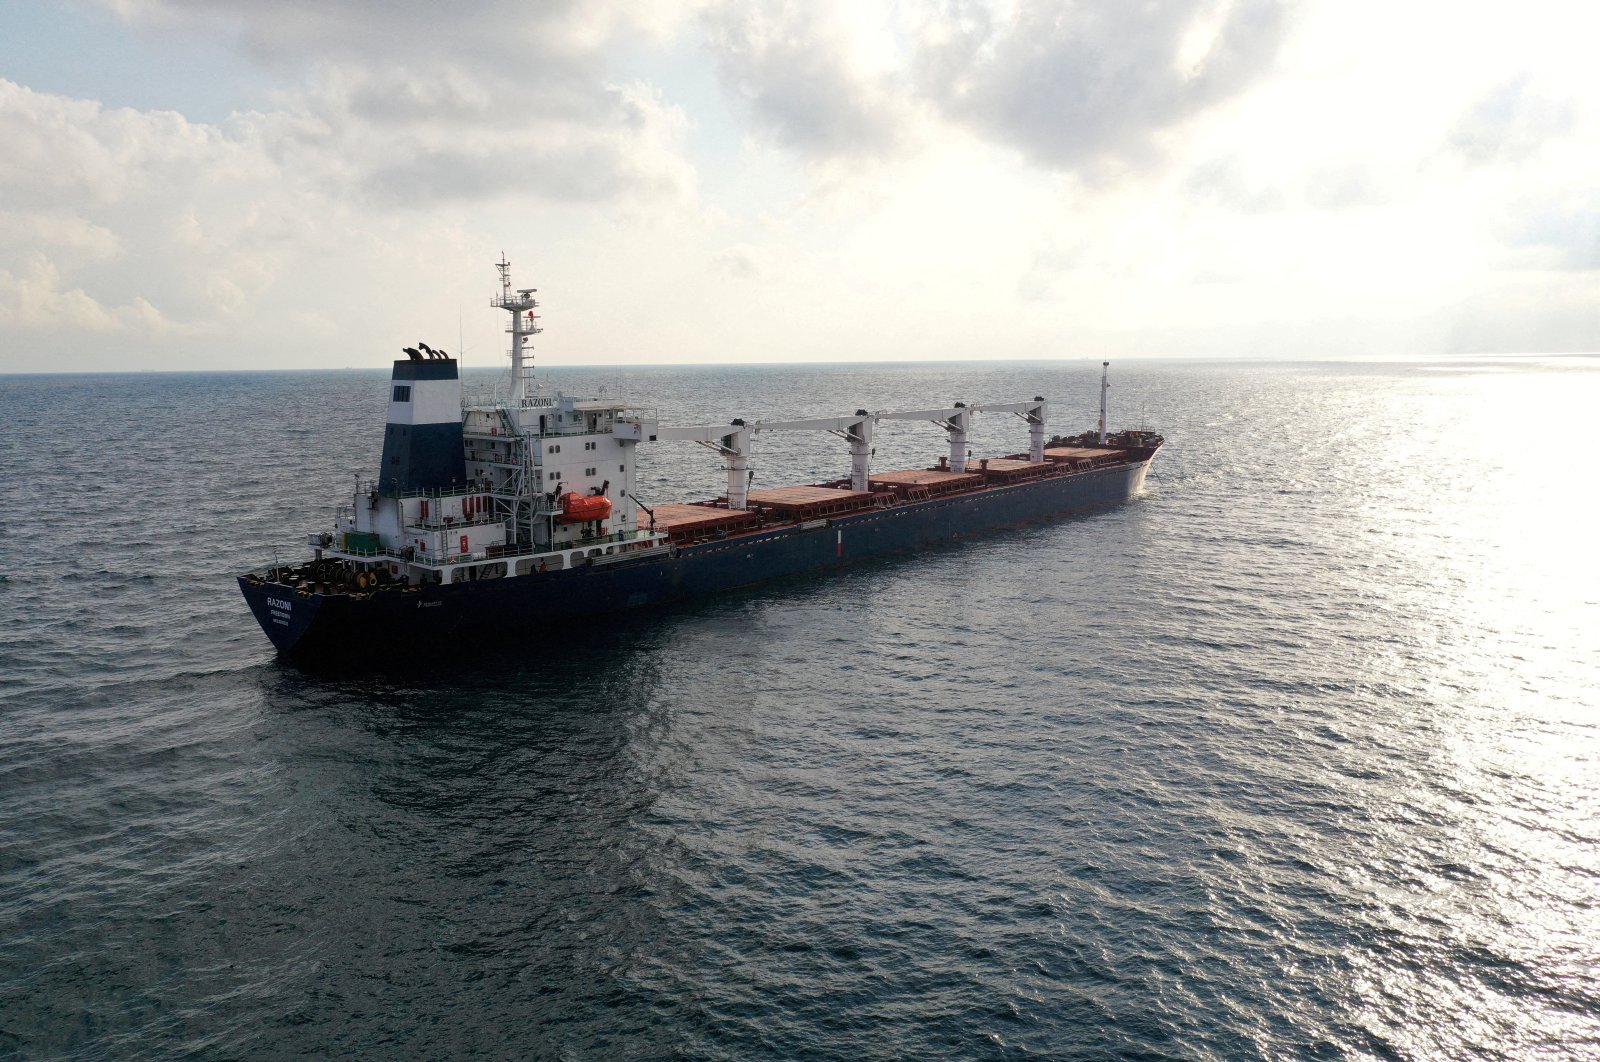 The Sierra Leone-flagged cargo ship Razoni, carrying Ukrainian grain, is seen in the Black Sea off Kilyos, near Istanbul, Türkiye, Aug. 3, 2022. (Reuters Photo)